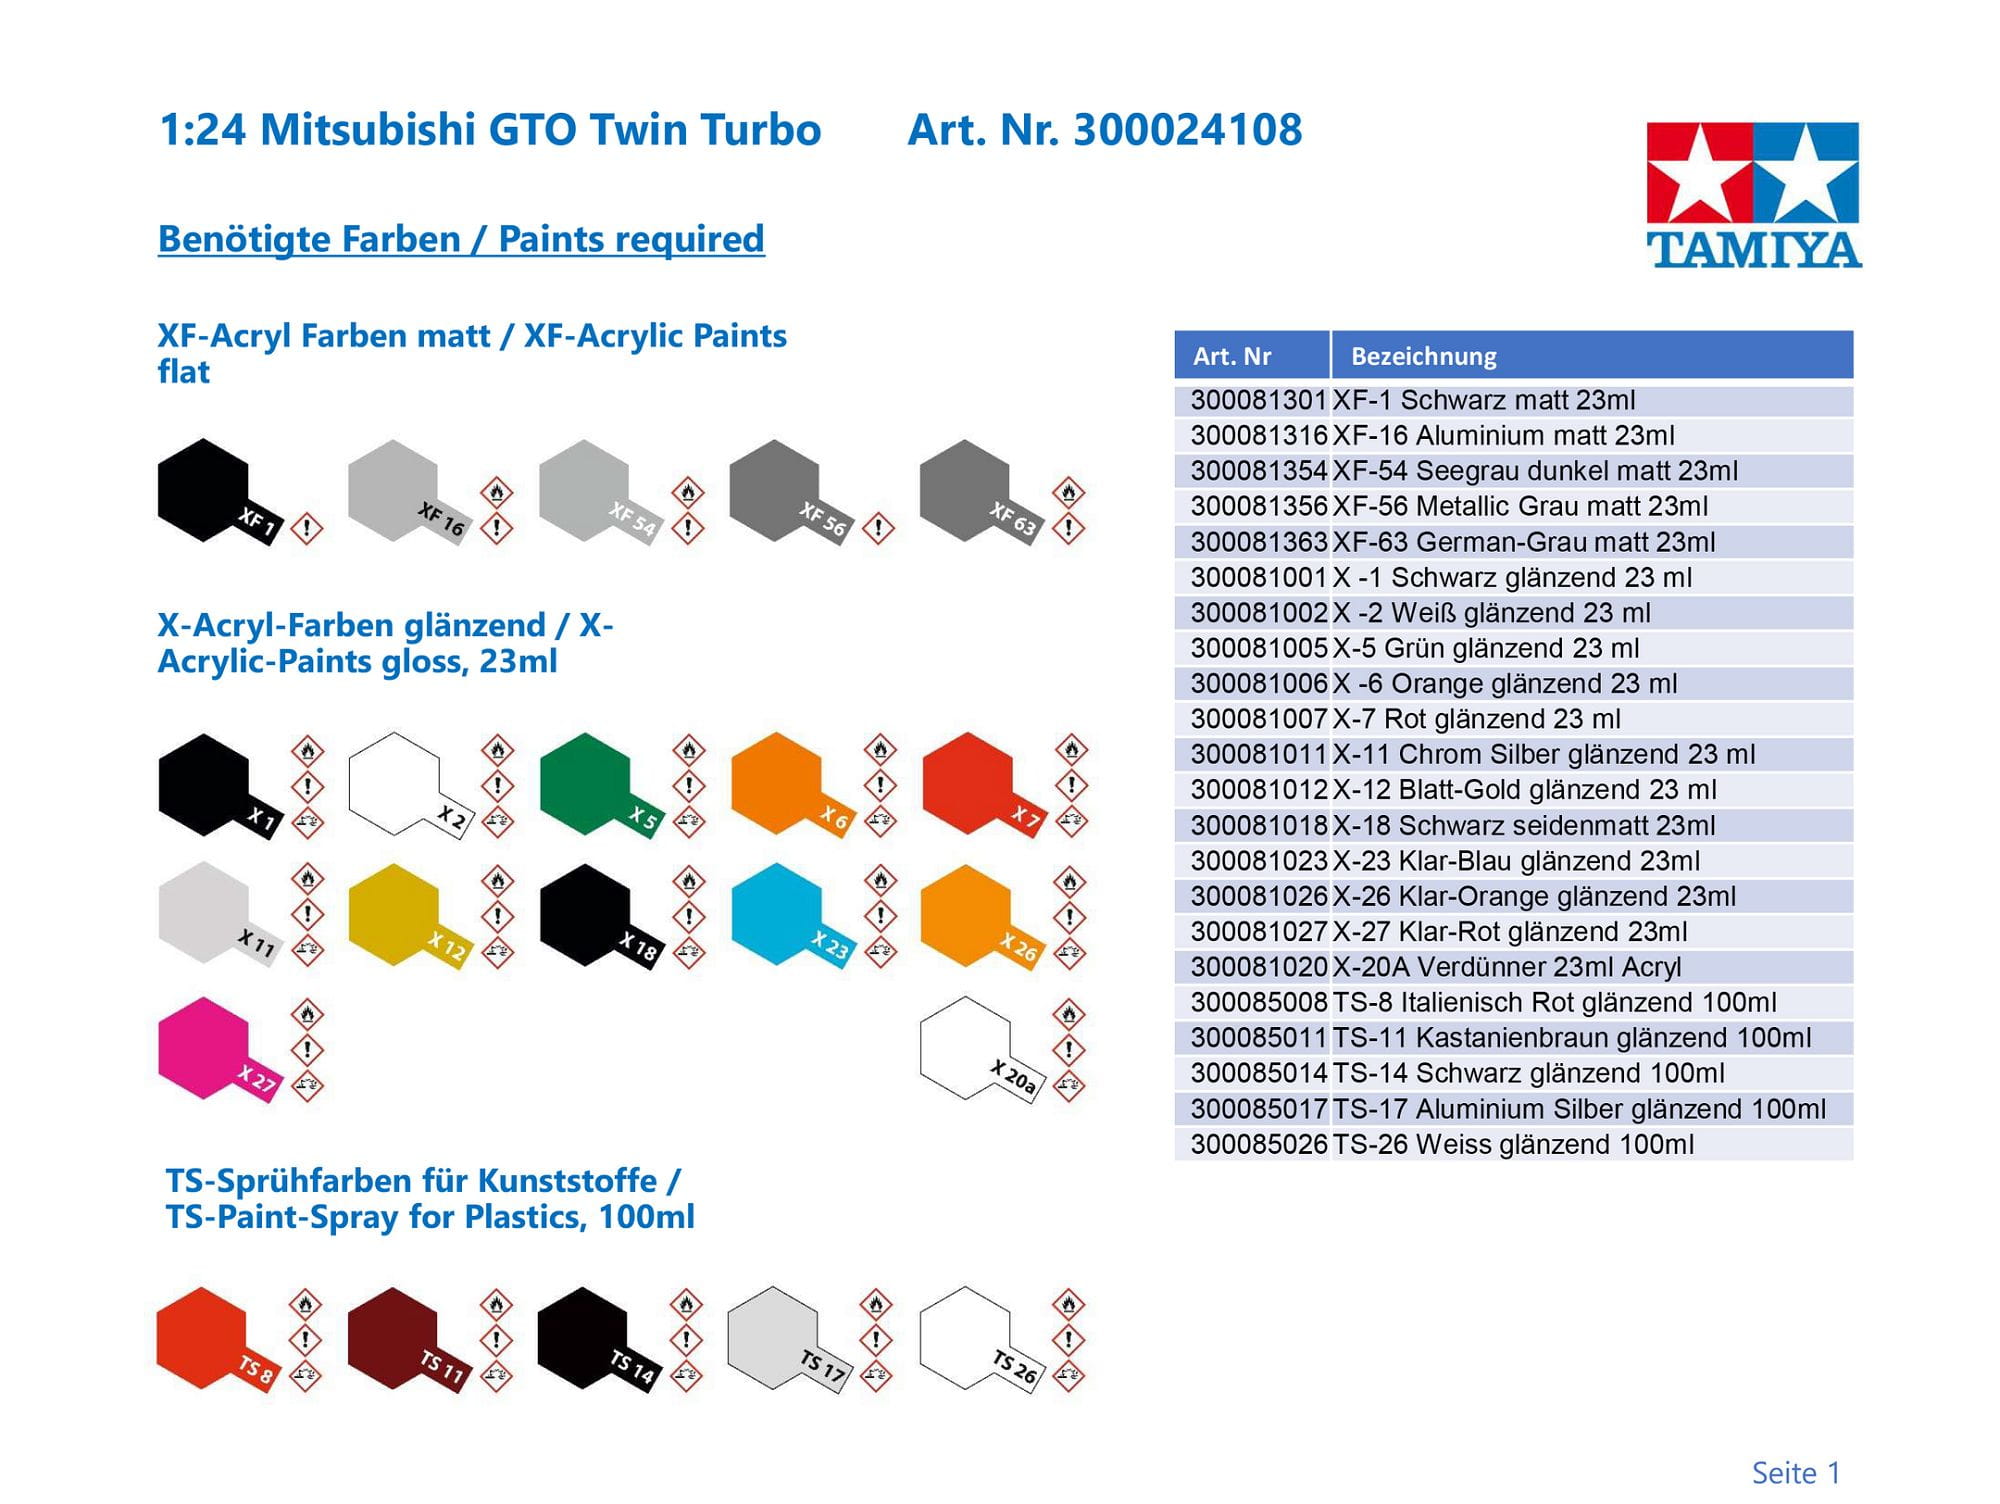 Tamiya Mitsubishi GTO Twin Turbo 1:24 Platik Modellbau Auto Bausatz